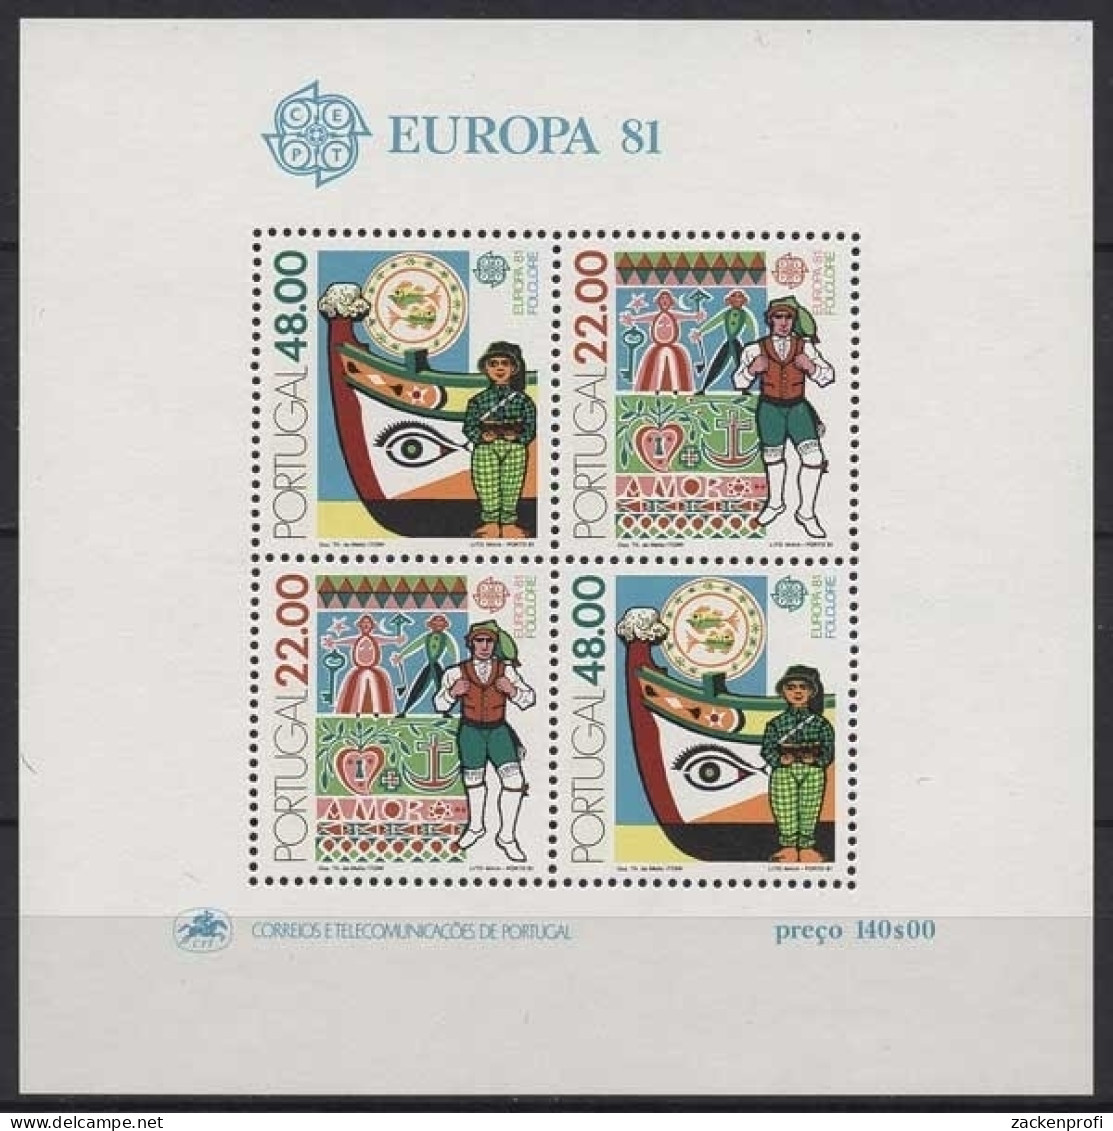 Portugal 1981 Europa CEPT Folklore Block 32 Postfrisch (C91031) - Blocks & Sheetlets